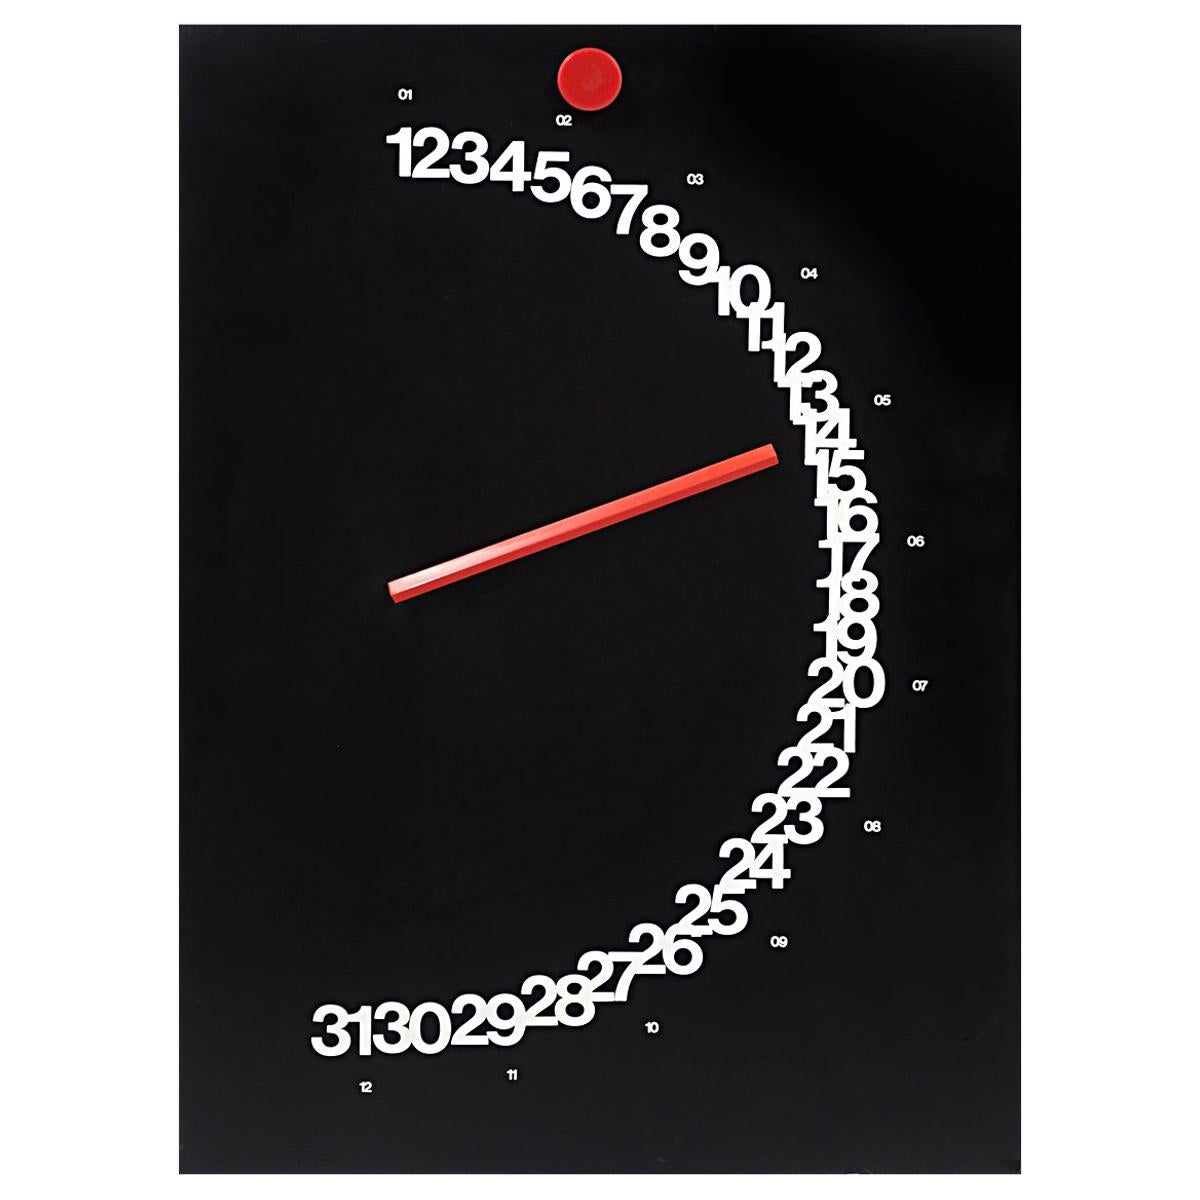 Meridiana Perpetual Calendar by Giulio Confalonieri for Studio Paolo Nava